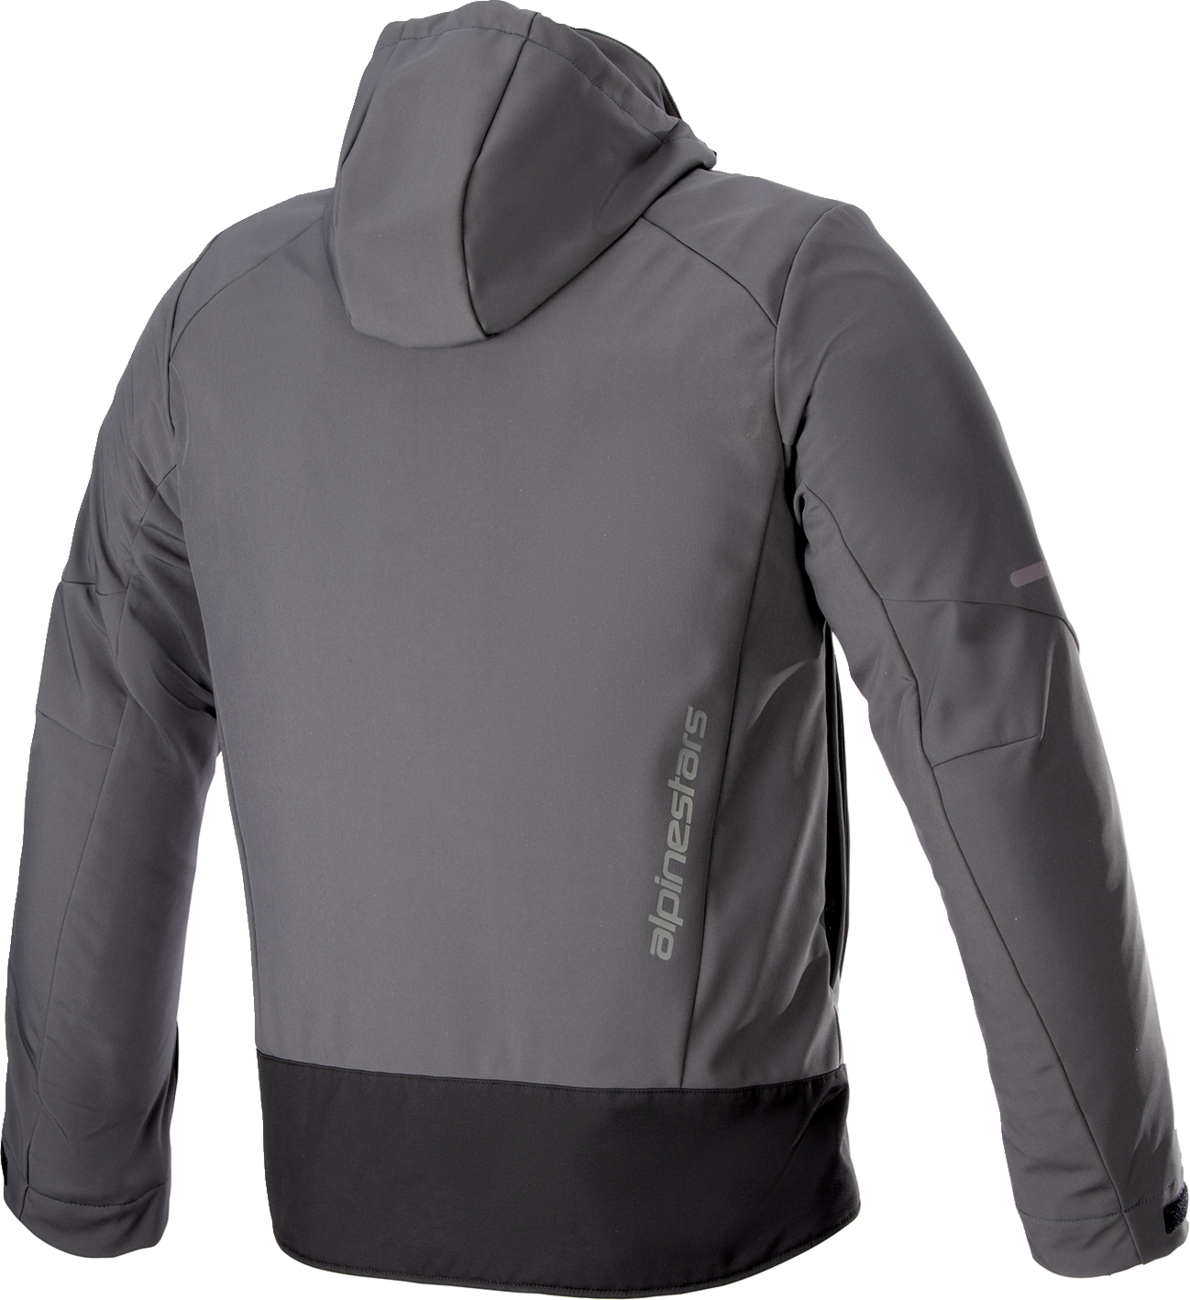 ALPINESTARS Neo Waterproof Jacket - Gray/Black - Small 4208023-9610-S